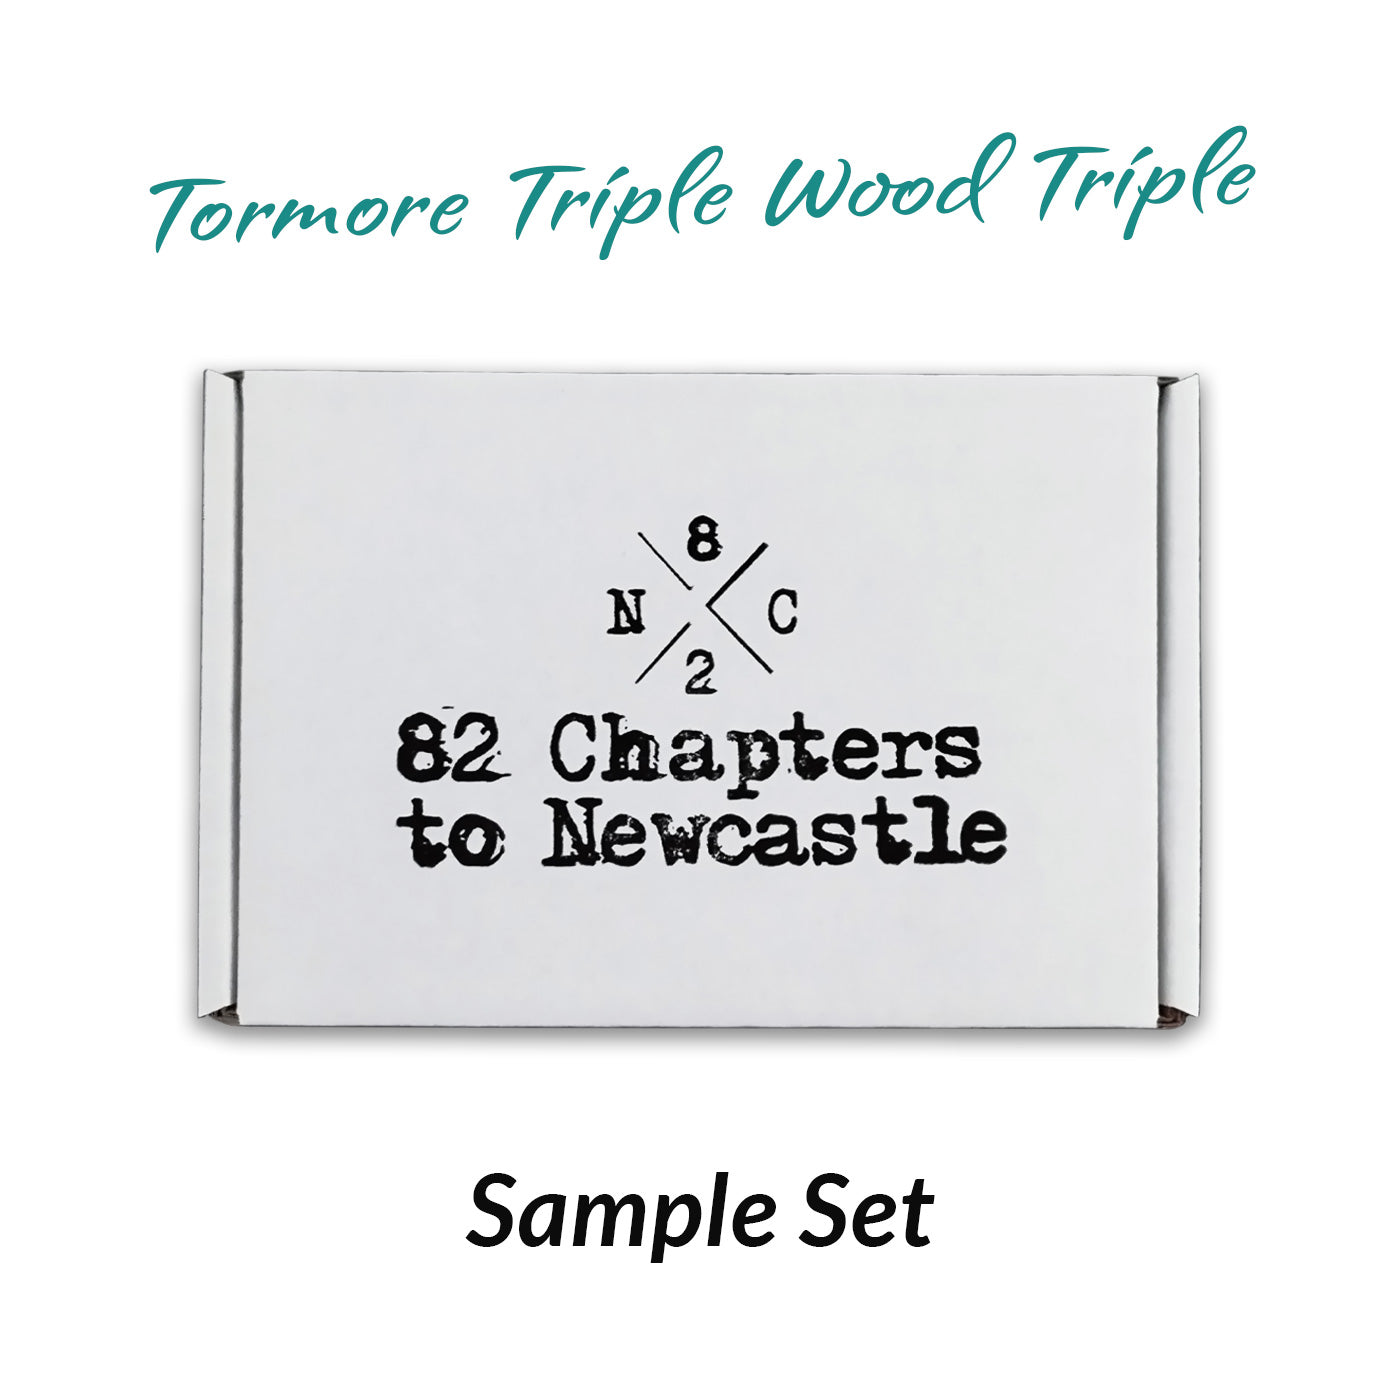 Sample Set - Tormore Triple